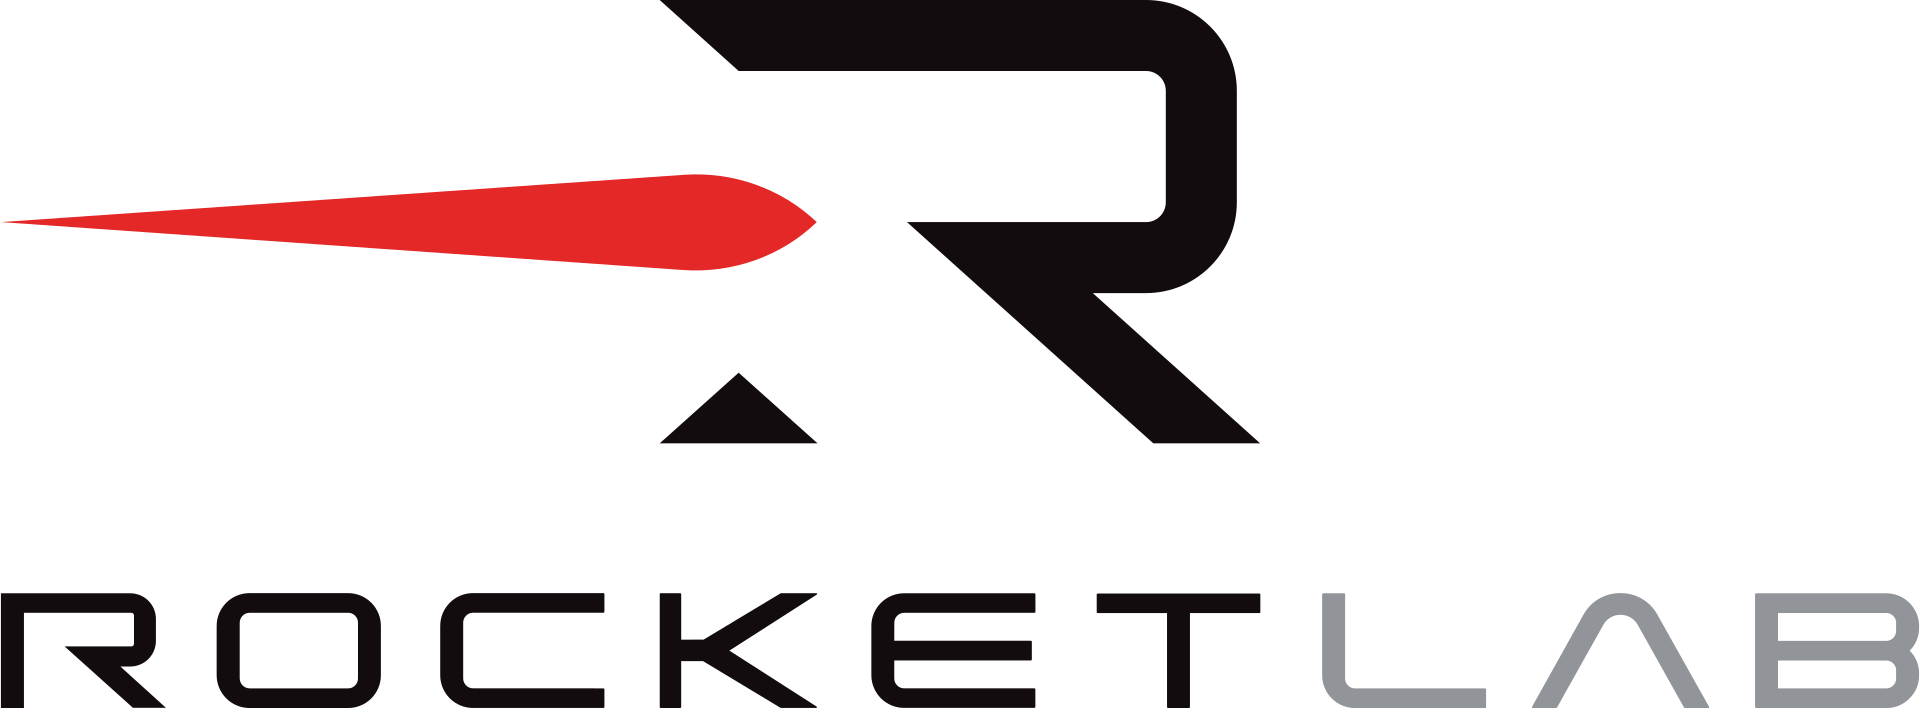 The logo of Rocket Lab since February 2022. ©Rocket Lab